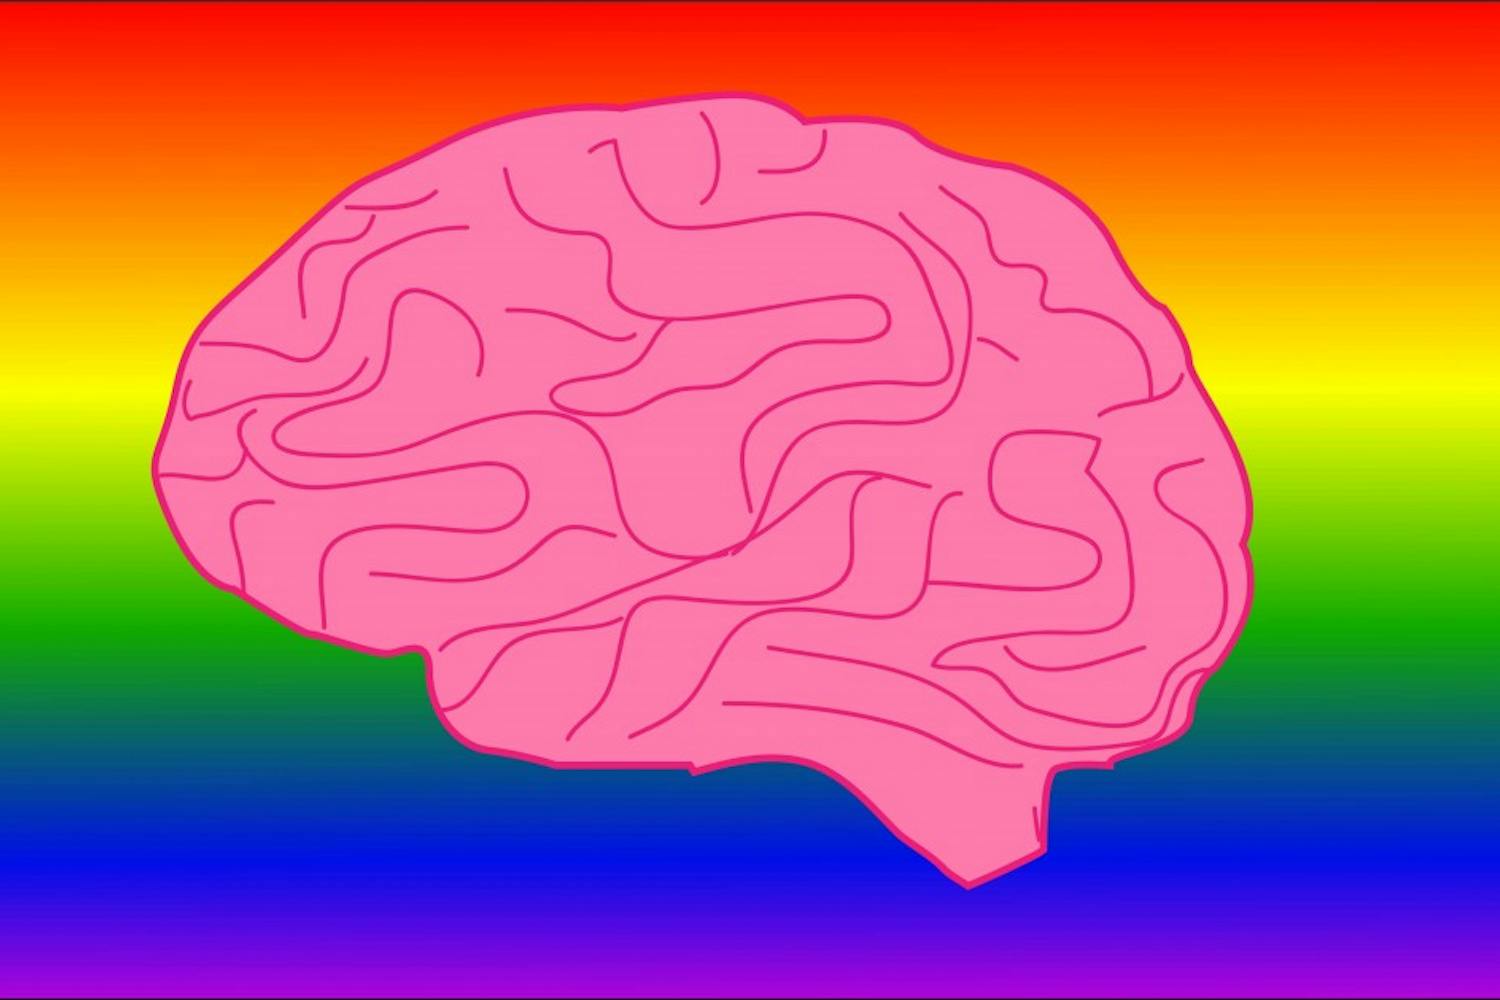 clocks are ticking Brain LGBT graphic ver1.jpg